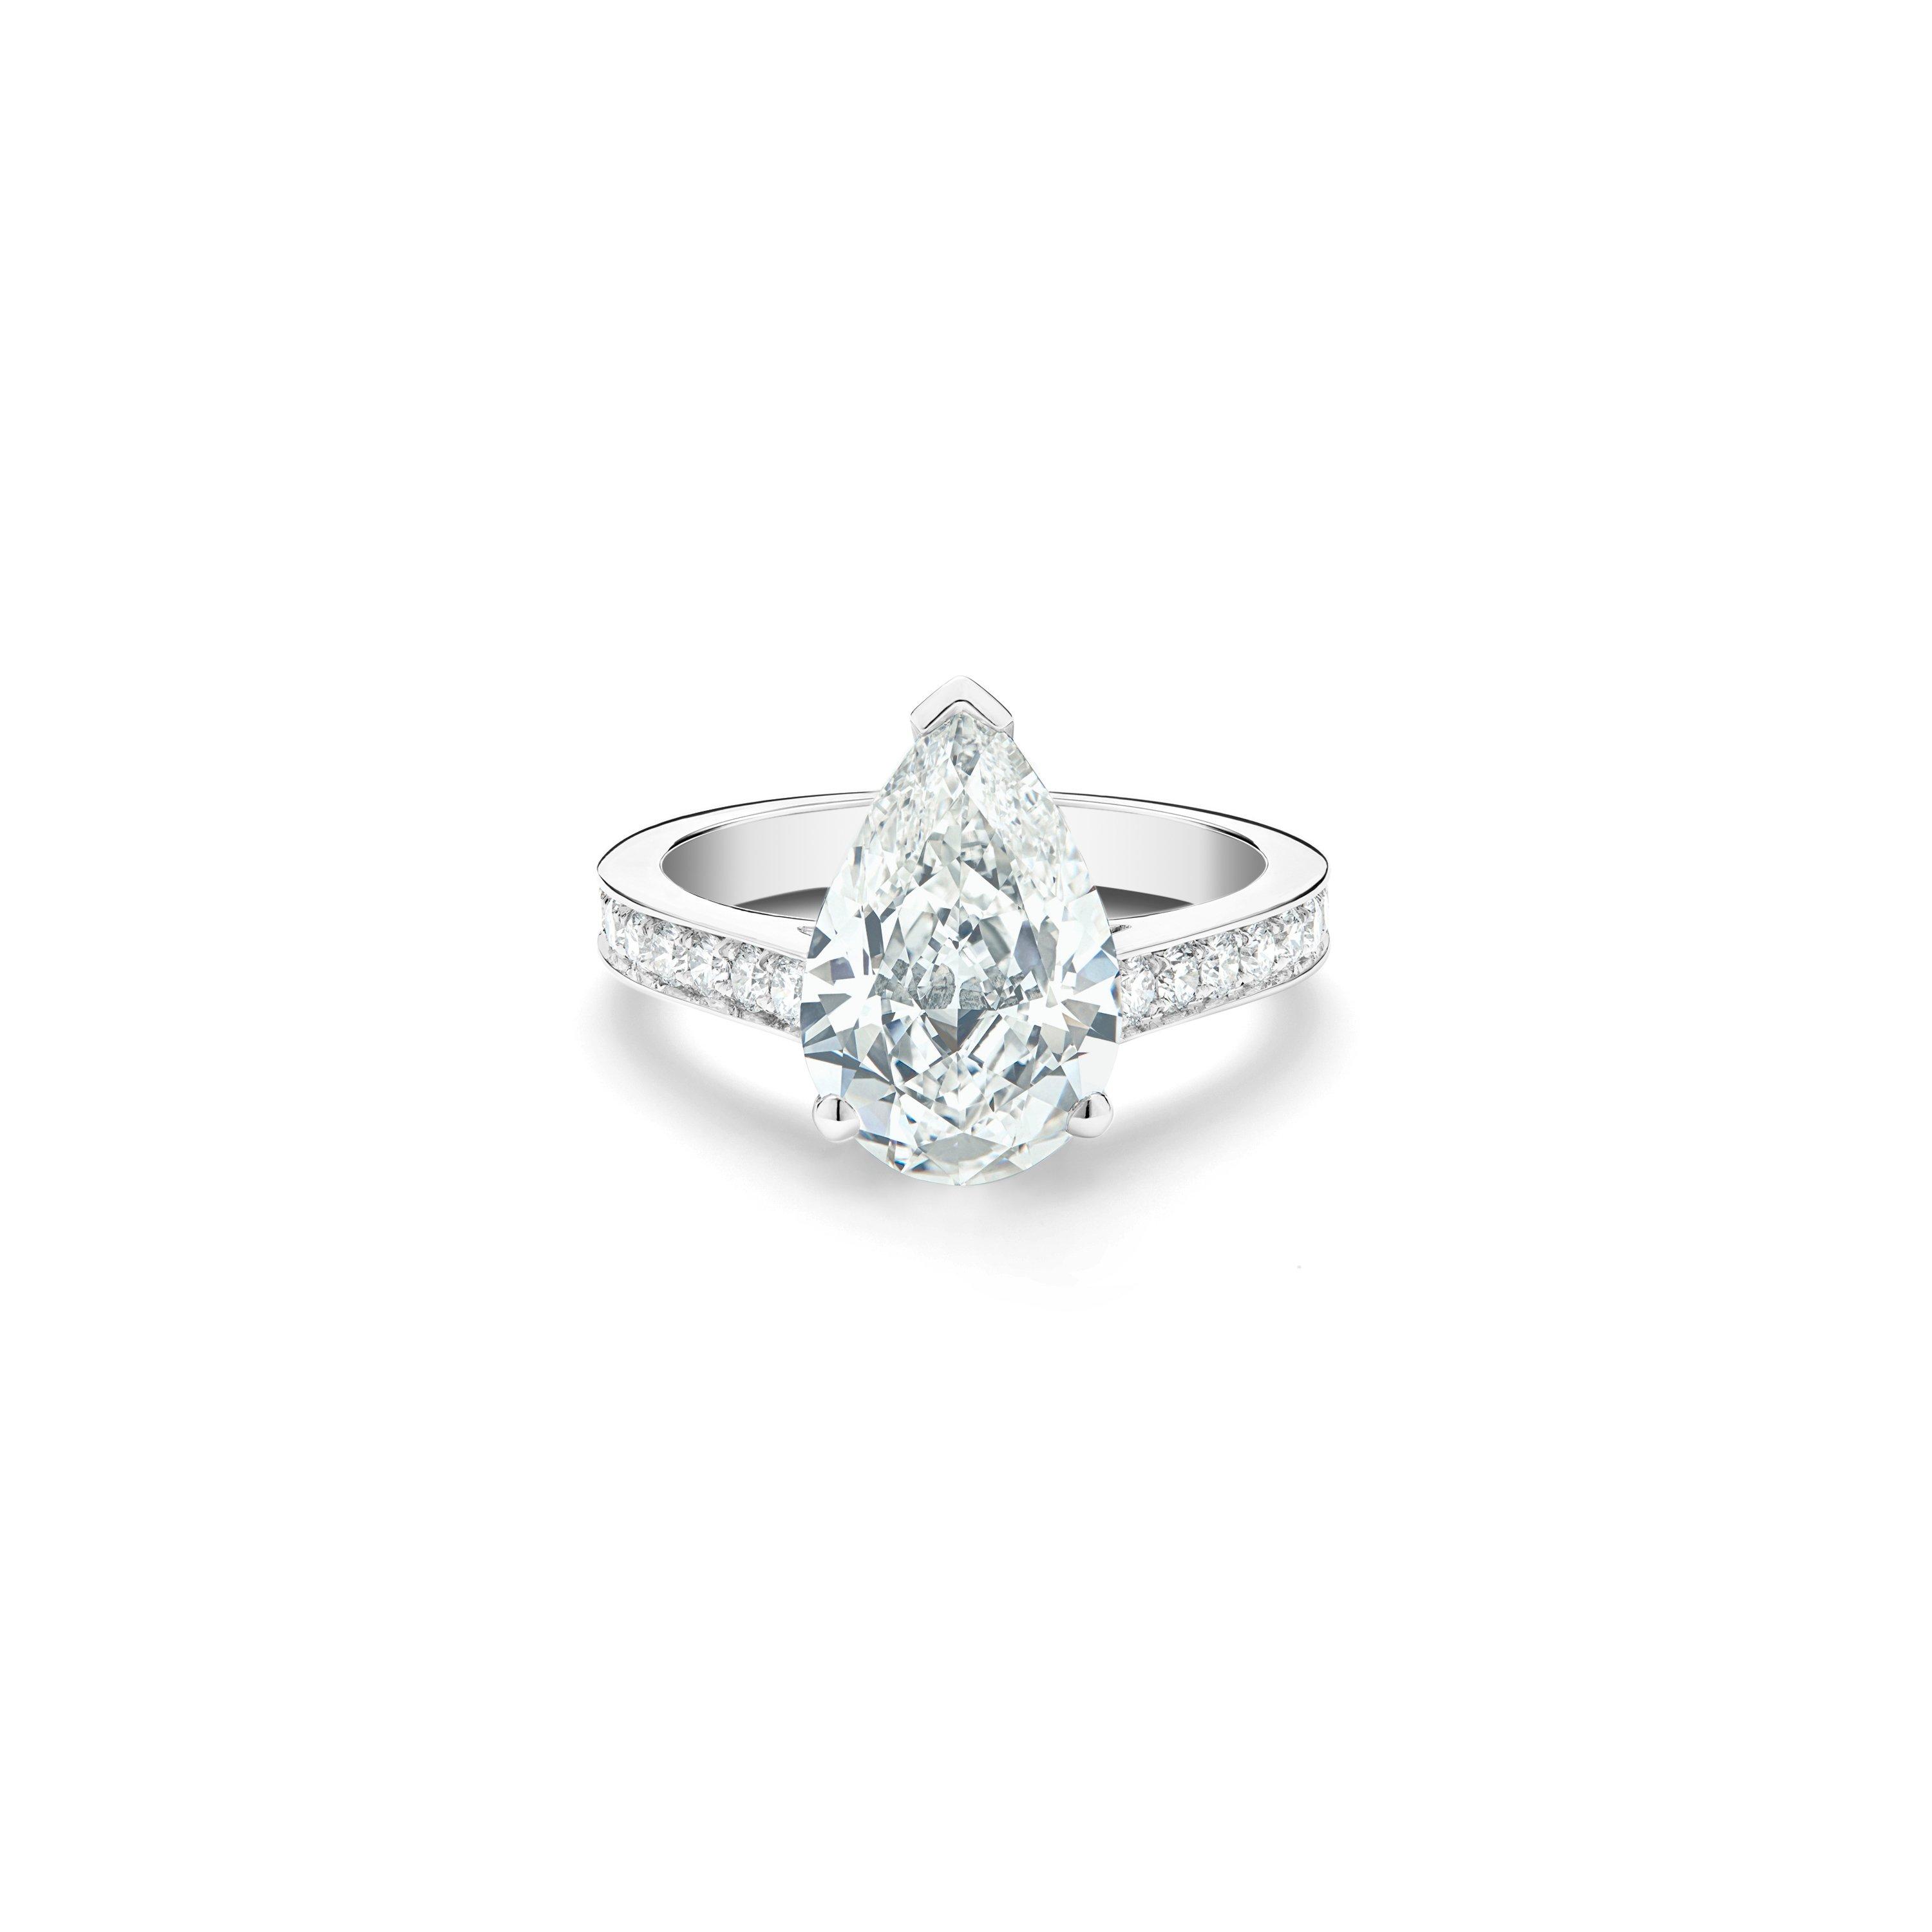 Old Bond Street pear-shaped diamond ring